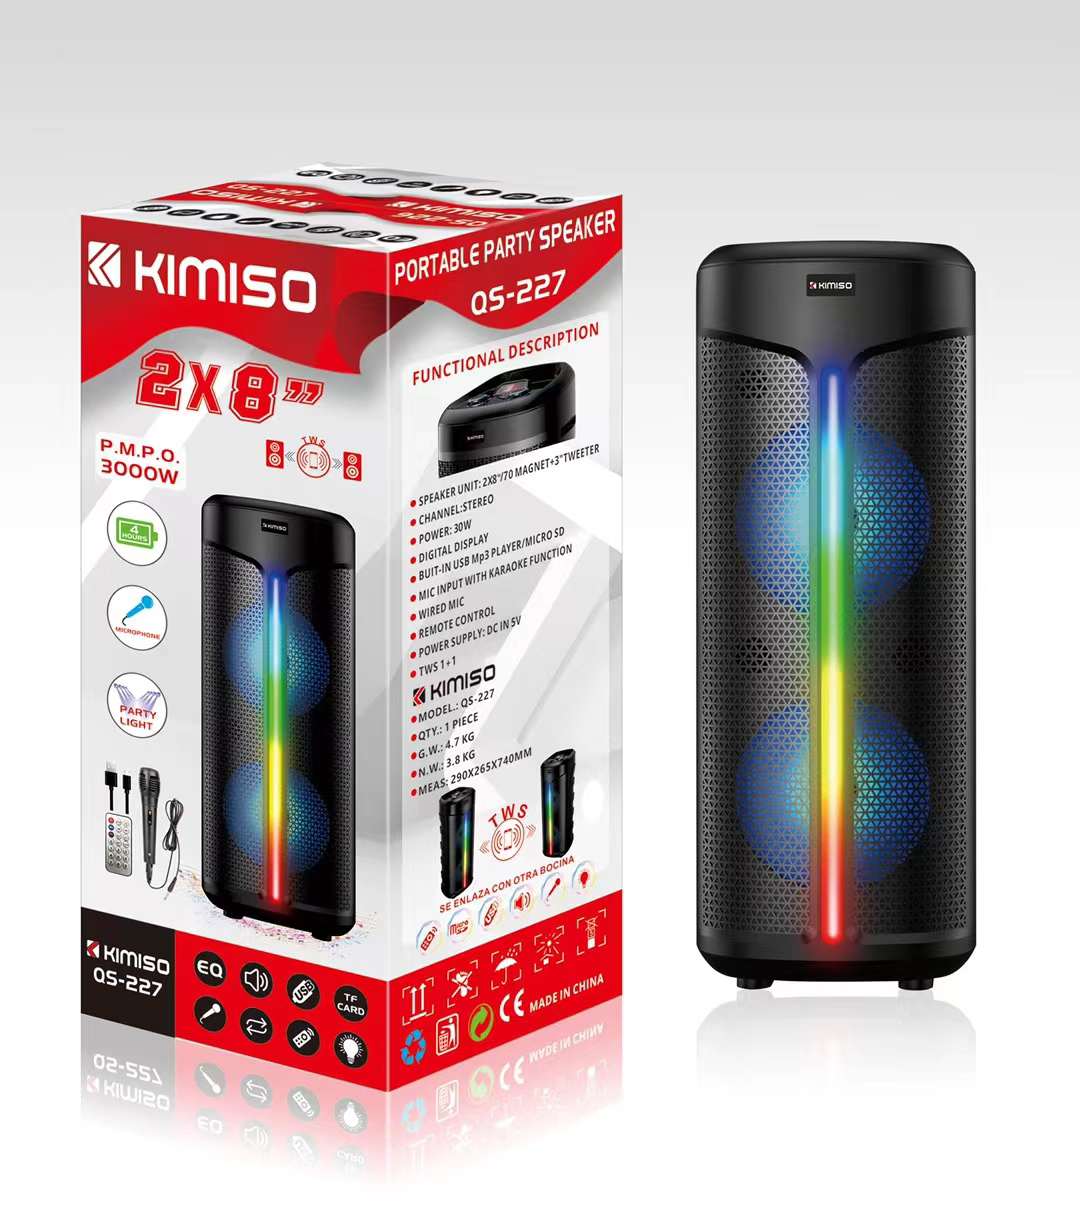 Tower Wireless Portable Bluetooth SPEAKER with Karaoke Microphone QS-227 (Black)